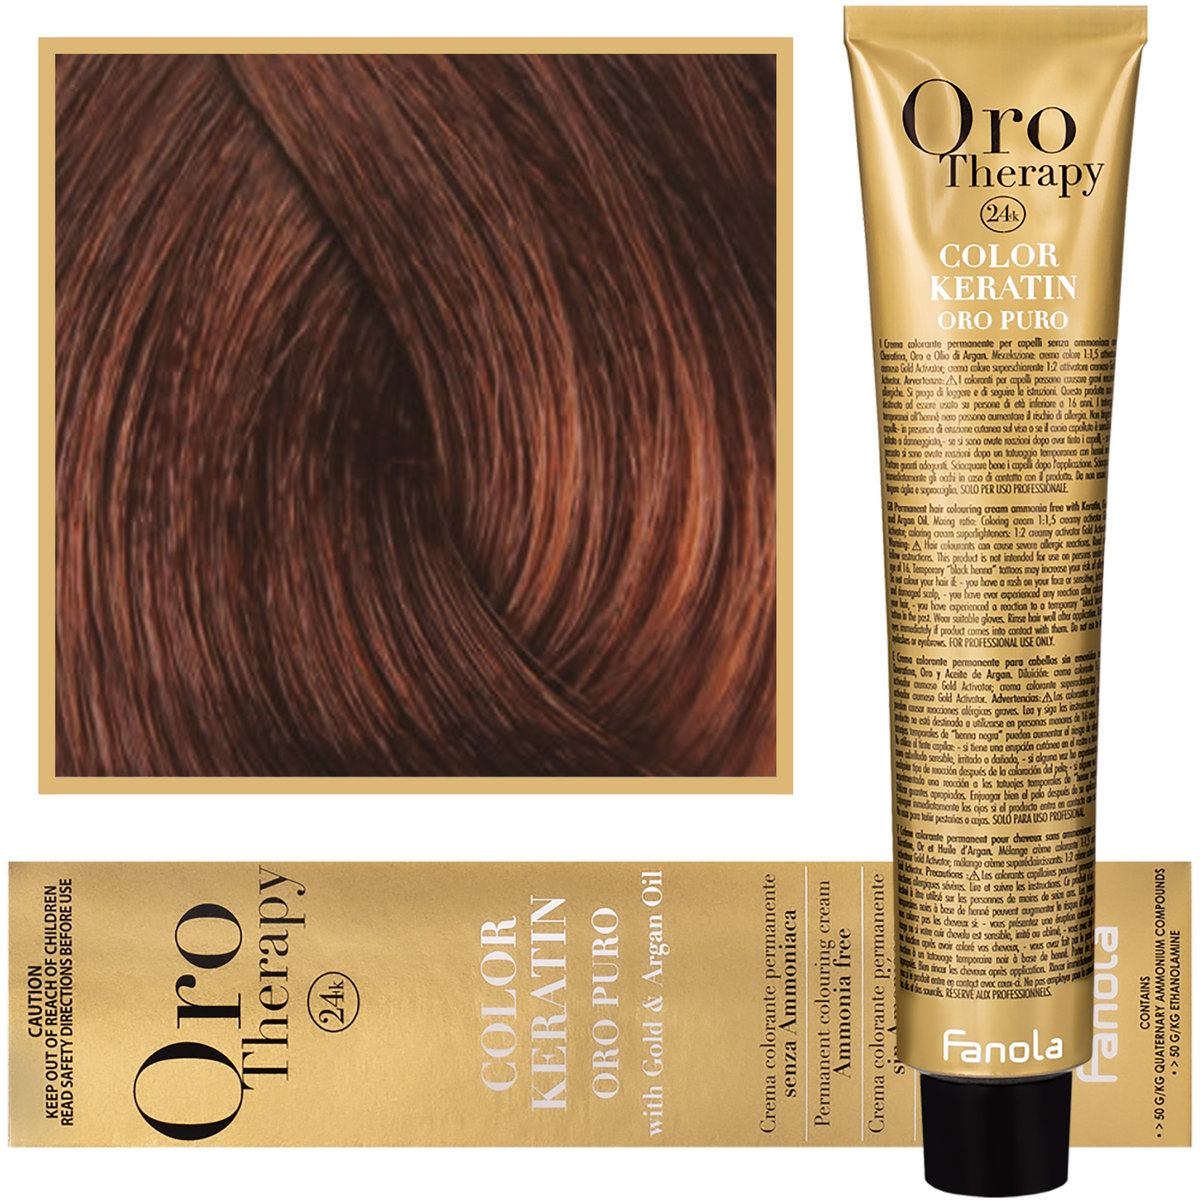 Fanola Tinte Oro Therapy 24 K Keratin Color 6.34 rubio Oscuro Dorado cobrizo 100 ML Crema colorante stałe para el cabello Sin amon iaco | enriq uecido con Keratina, aceite de argán, Oro Puro MICROA c 8032947861736